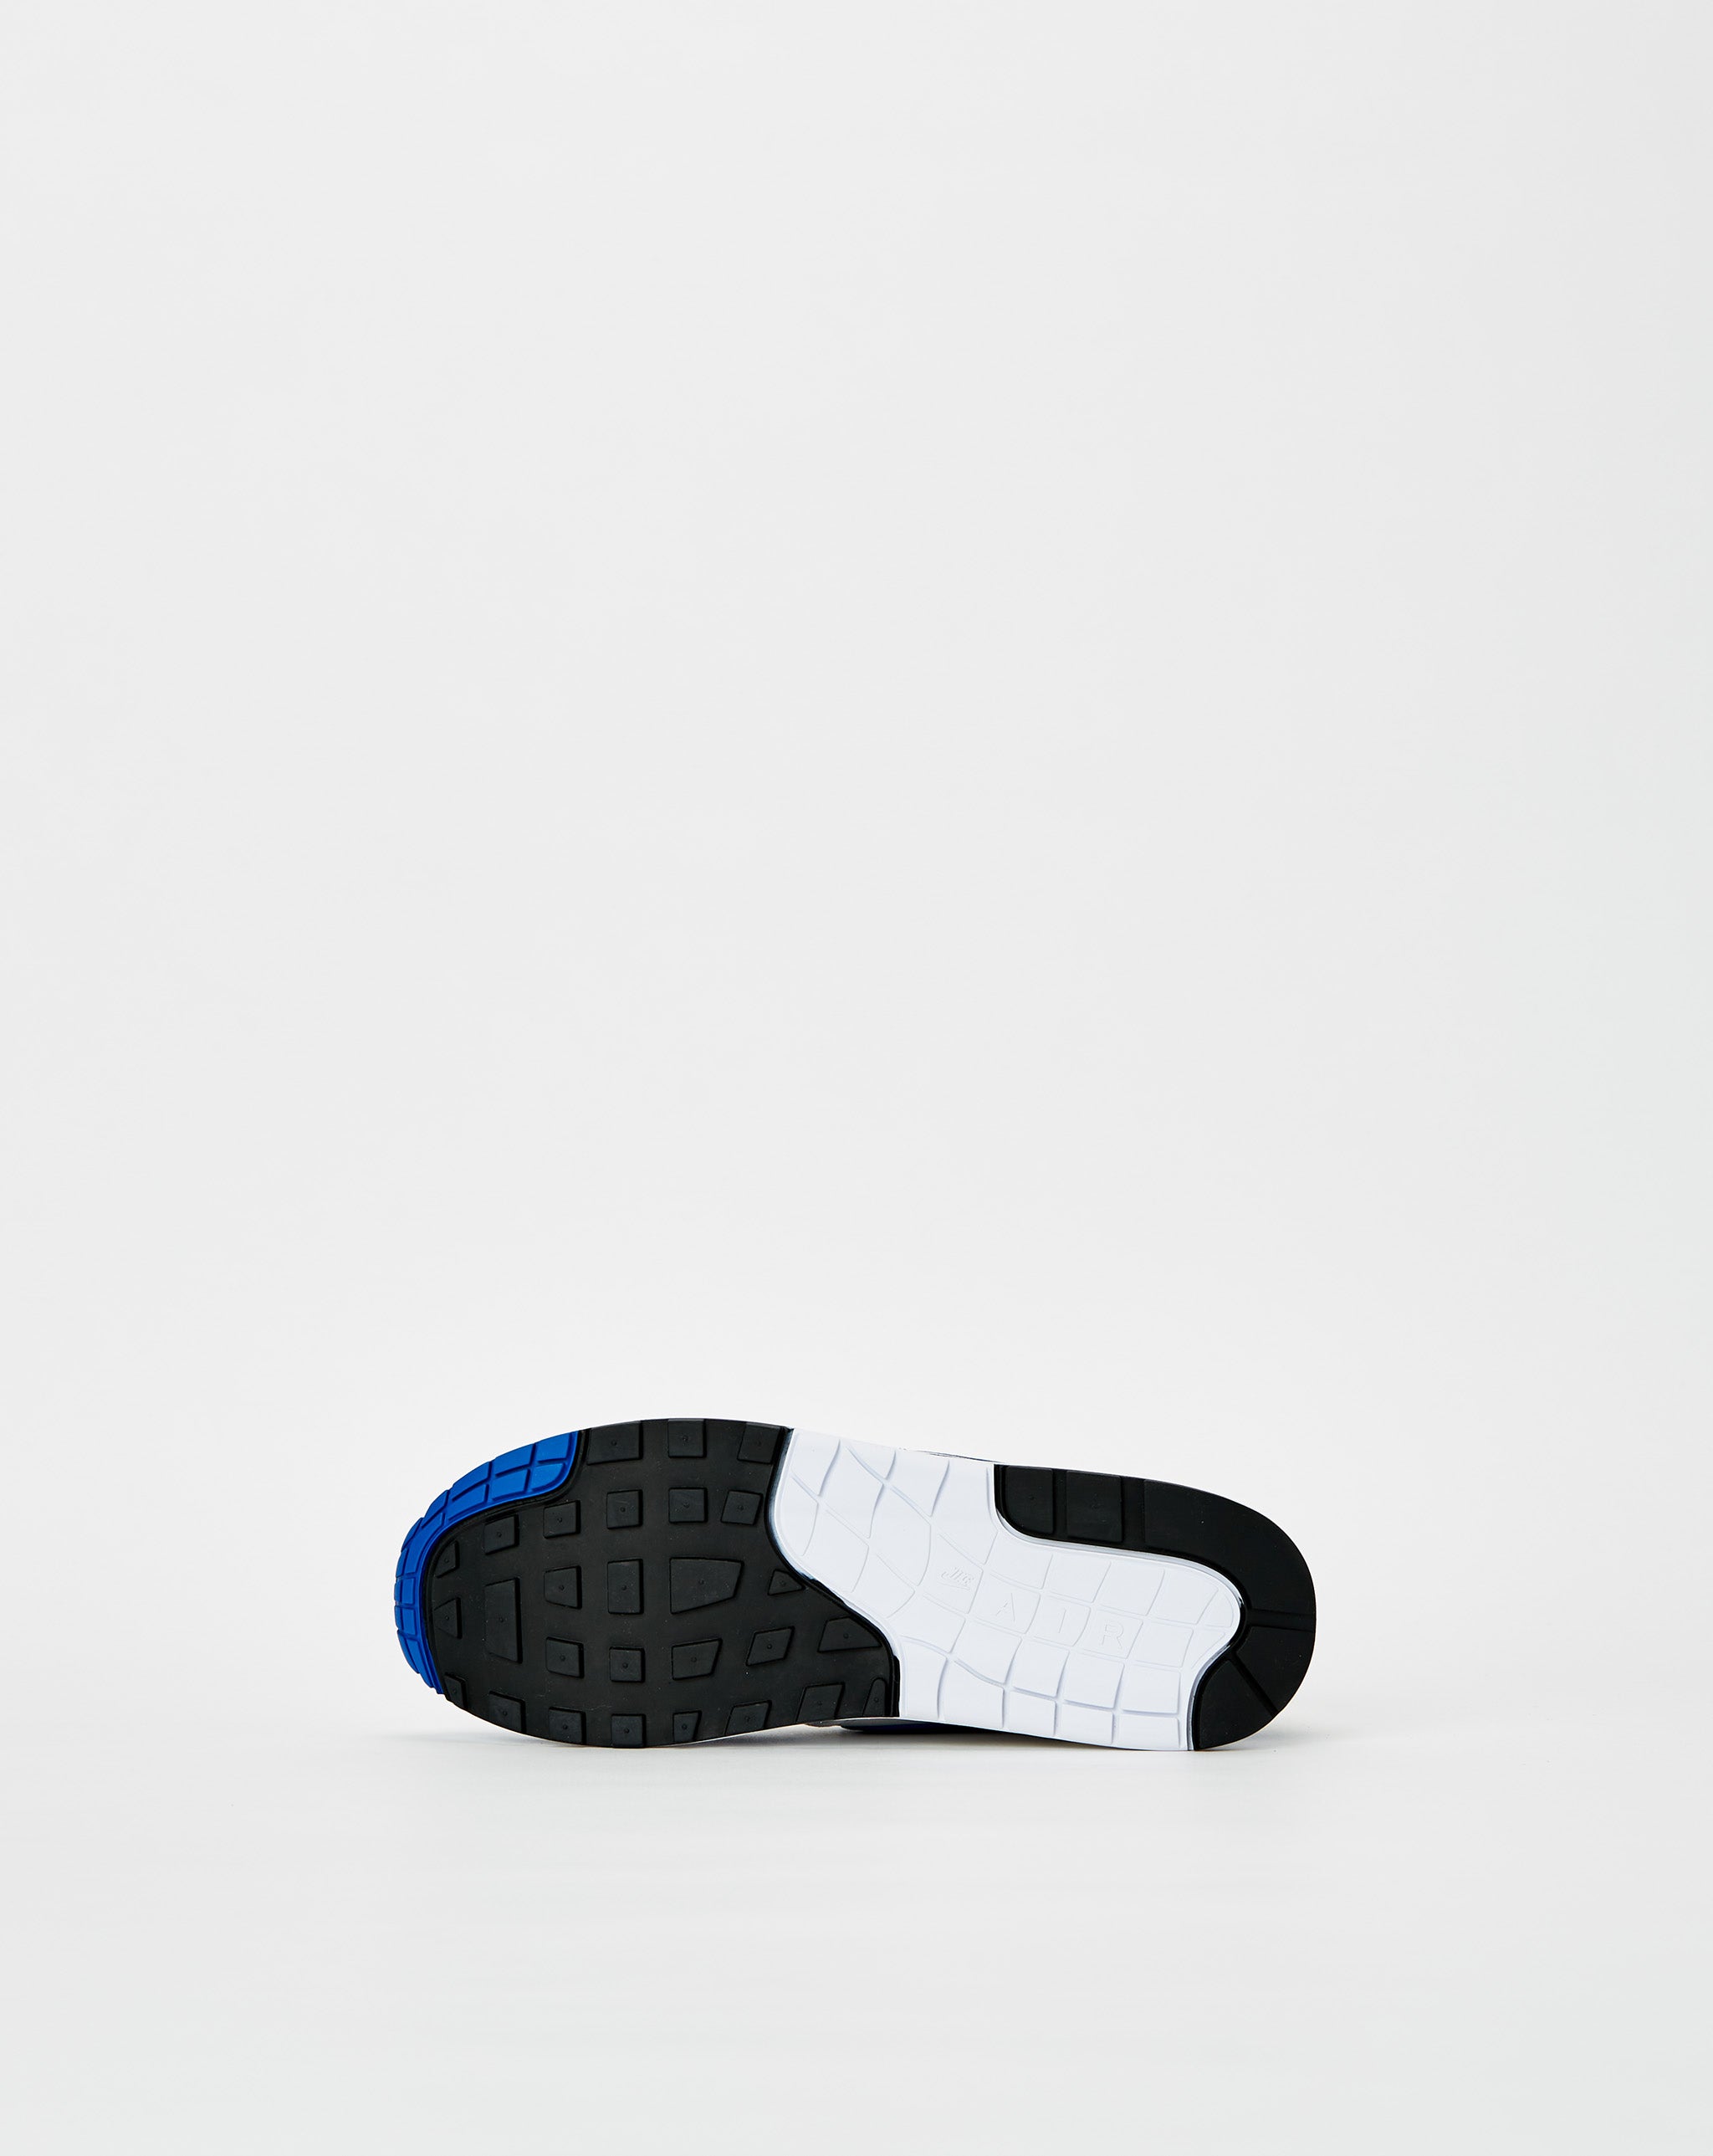 Nike nike cmft dunk green sneakers black shoes  - Cheap Erlebniswelt-fliegenfischen Jordan outlet